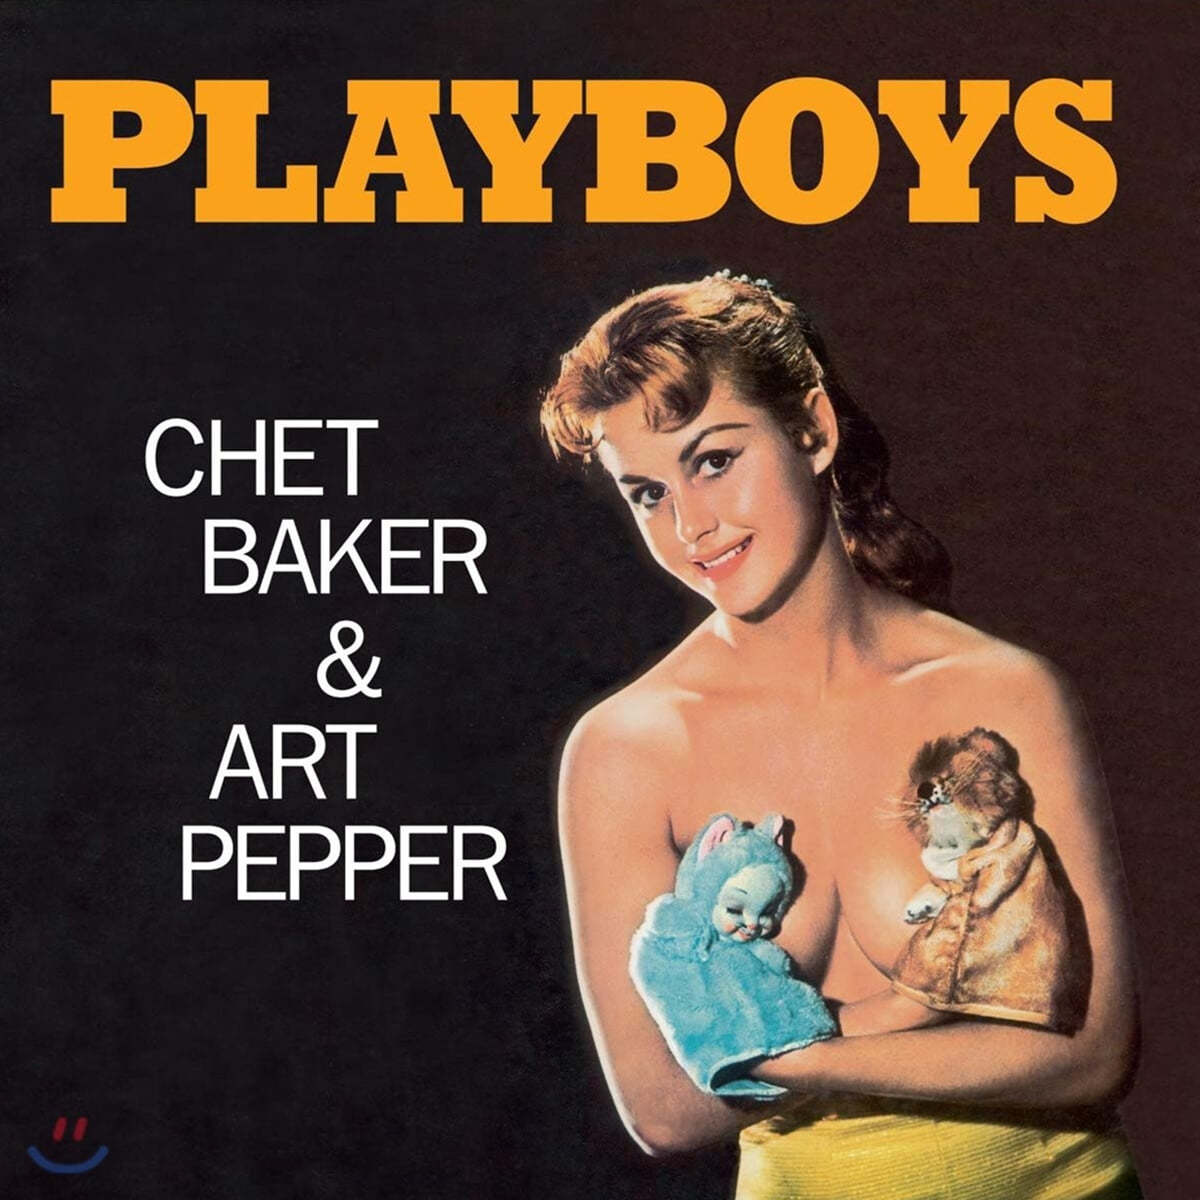 Chet Baker (쳇 베이커) - Playboys [투명 컬러 LP]